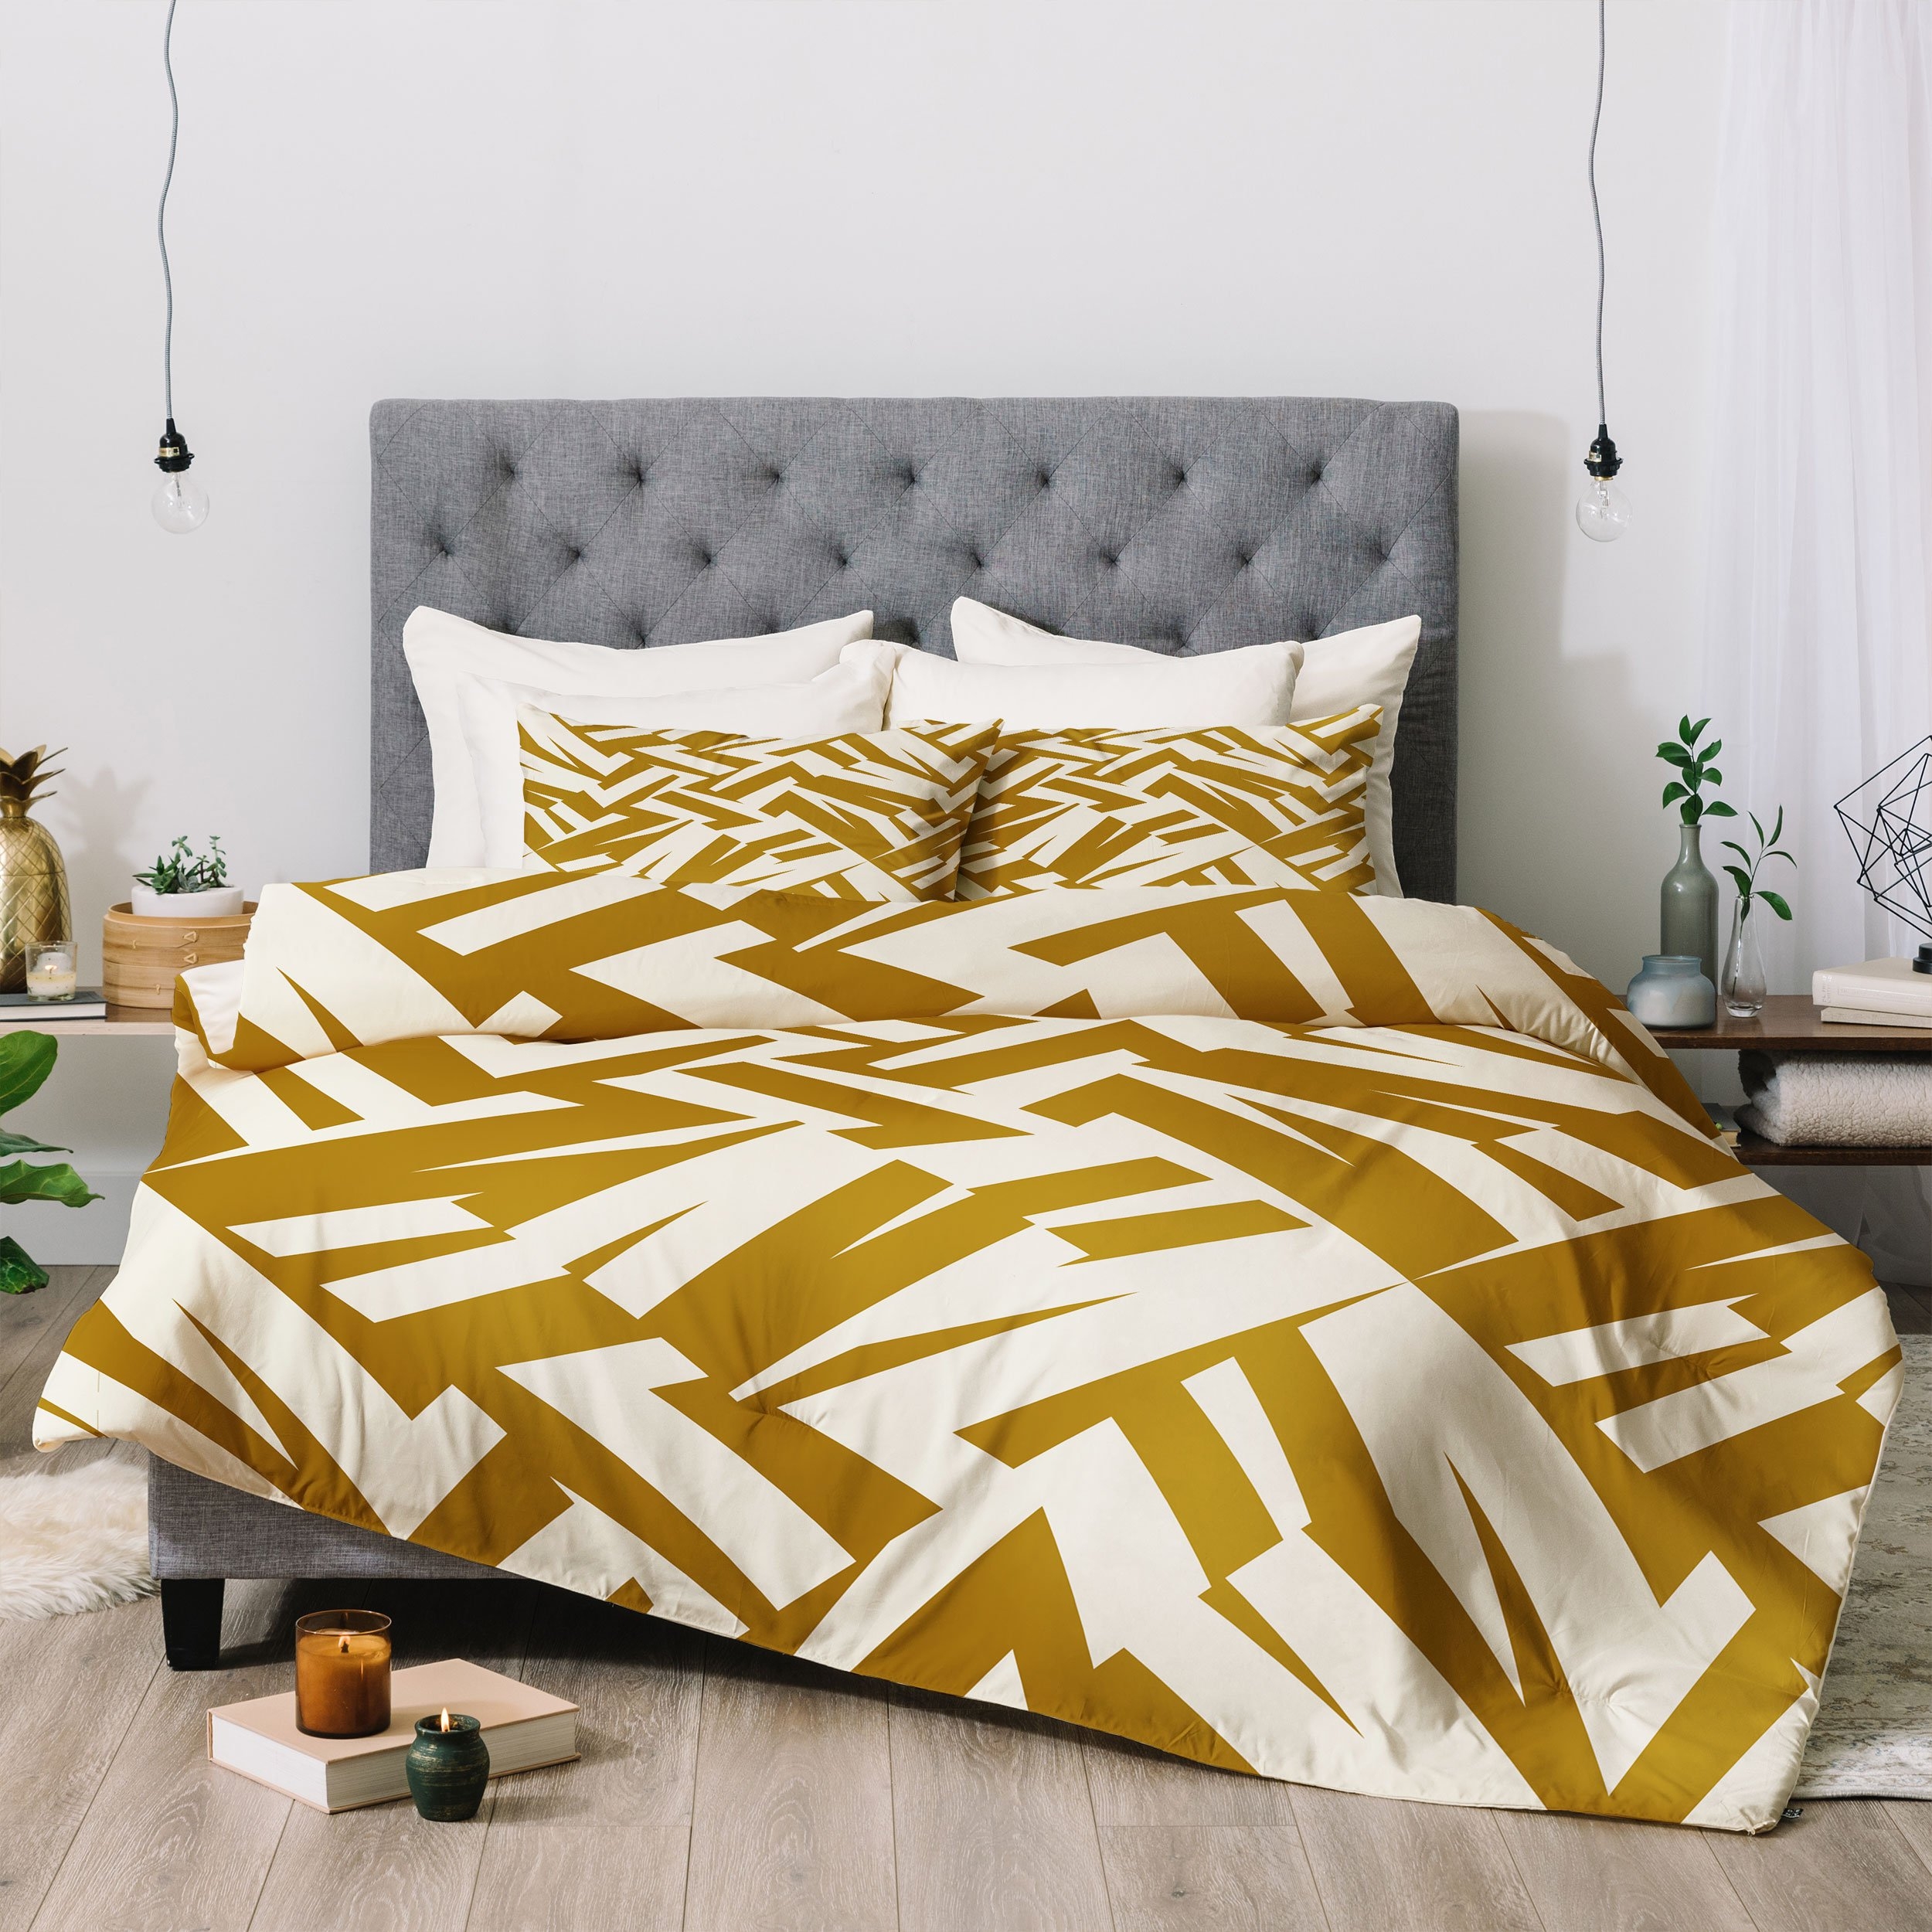 Marta Barragan Camarasa Geometric forms 06 Comforter - King / Comforter Only - Image 0